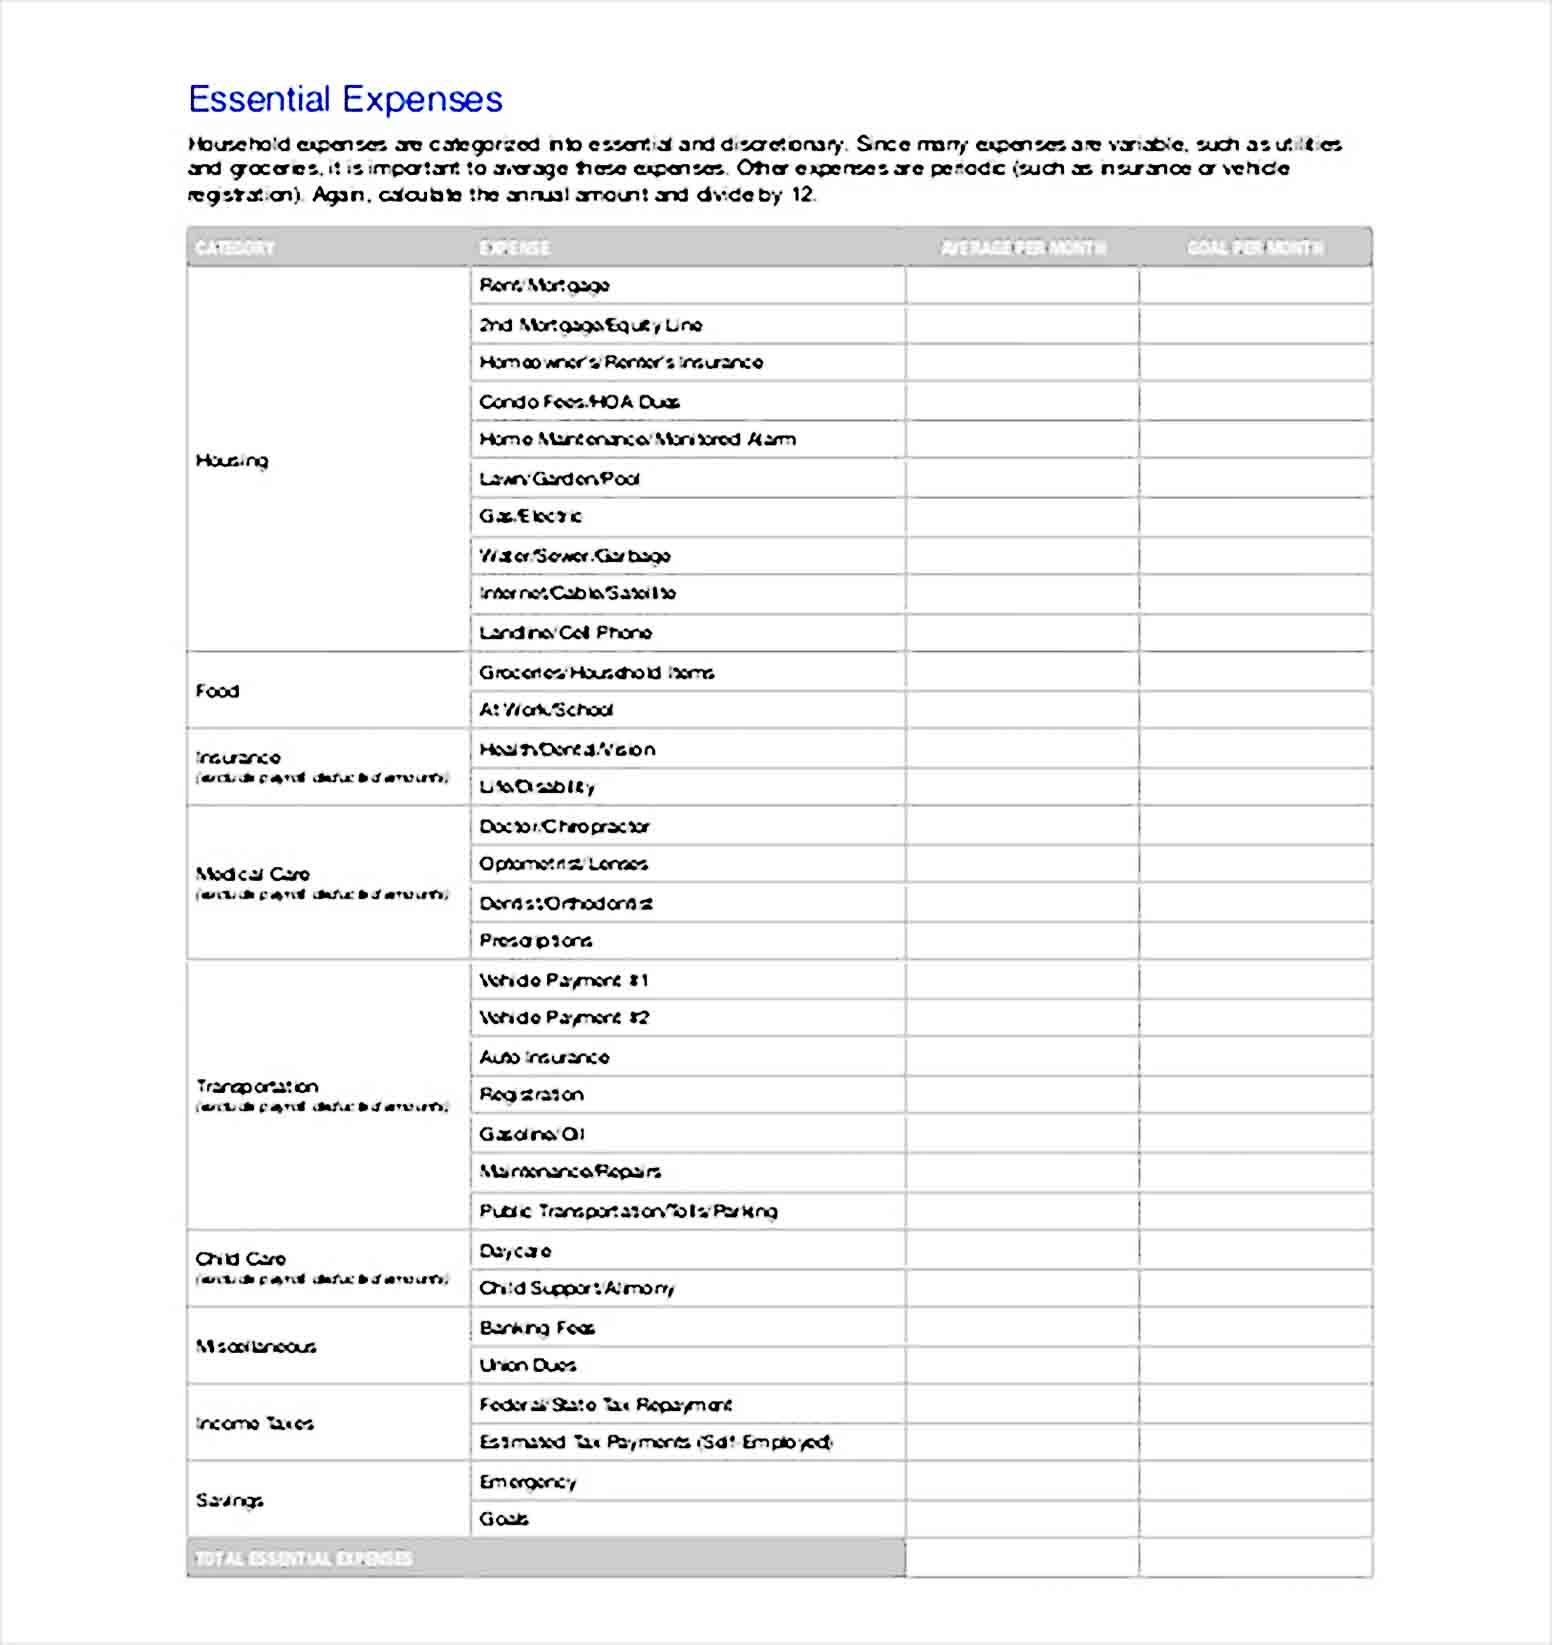 Money management planning PDF Download